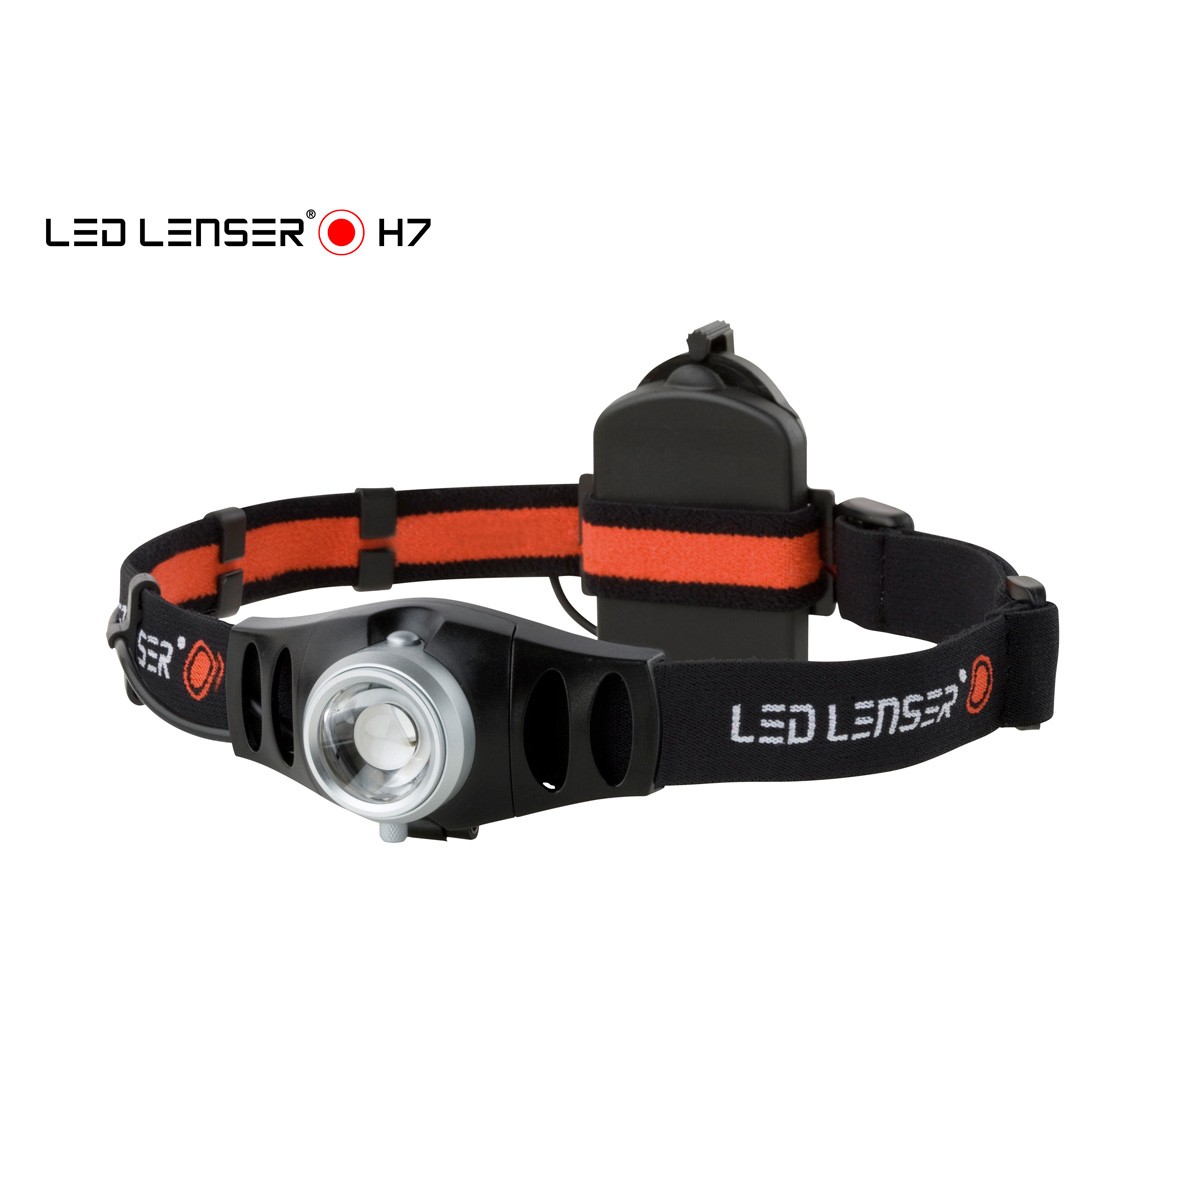 Led Lenser H7 Head Torch